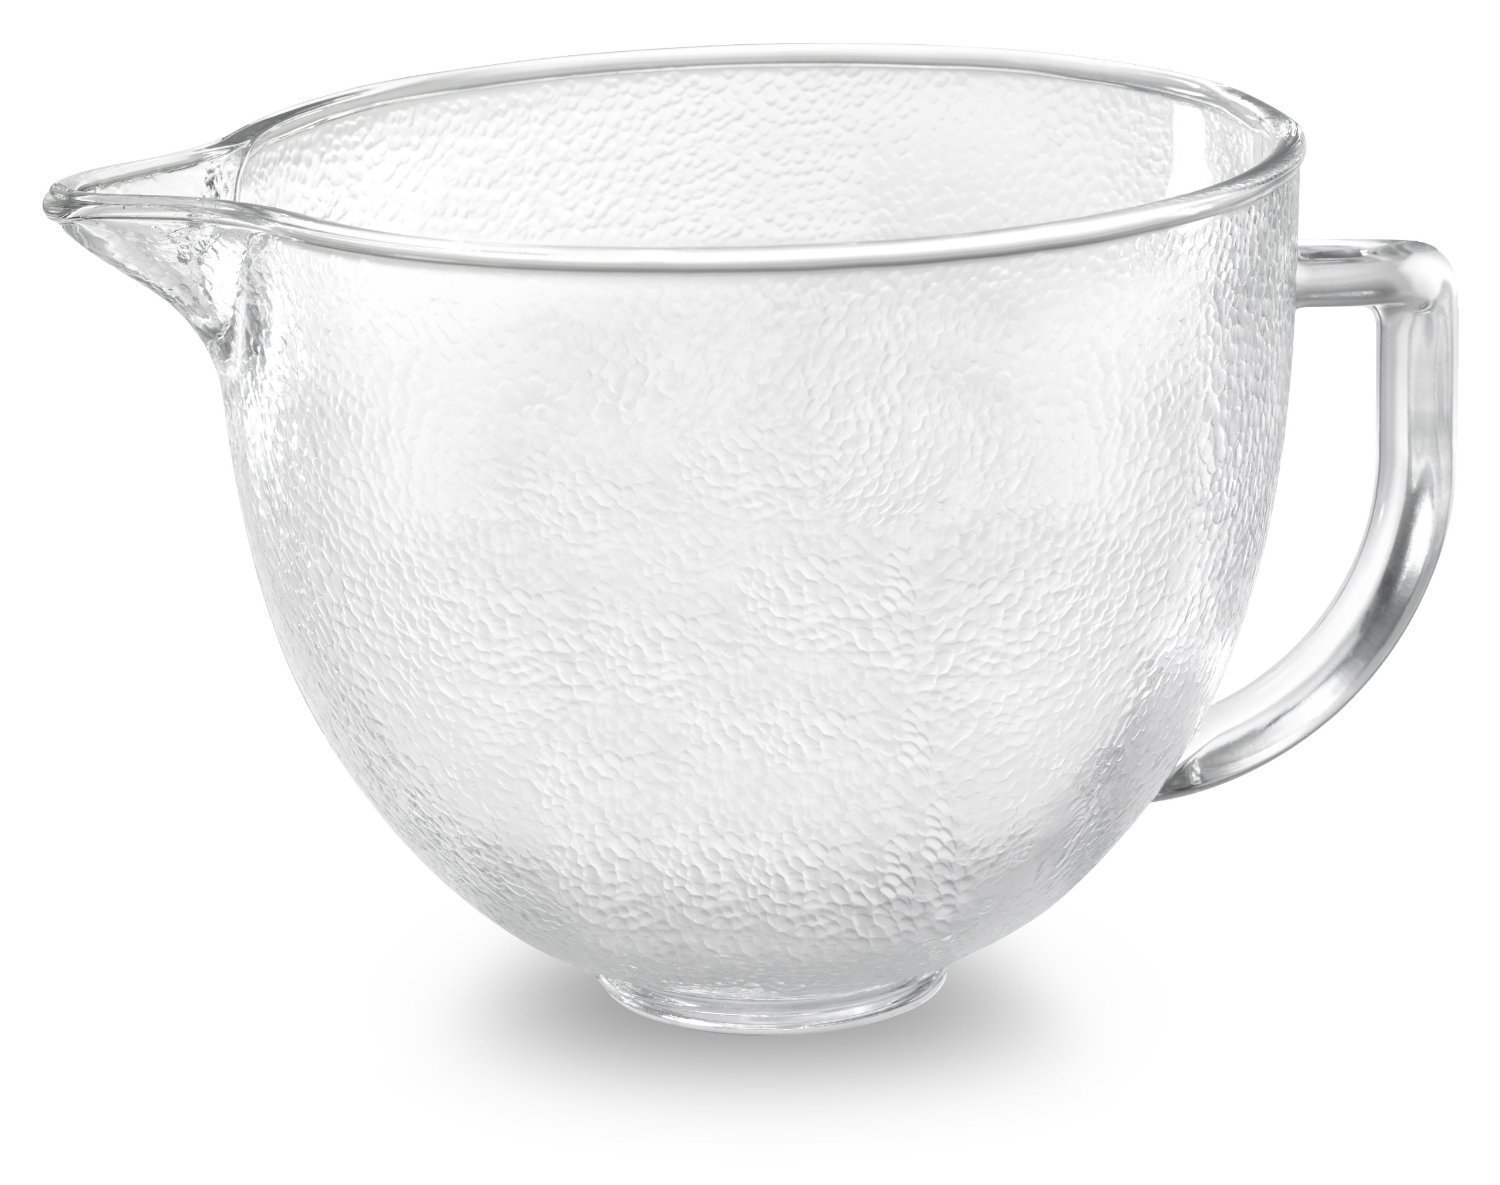 KitchenAid 5-Quart Glass Bowl Hammered - image 1 of 1